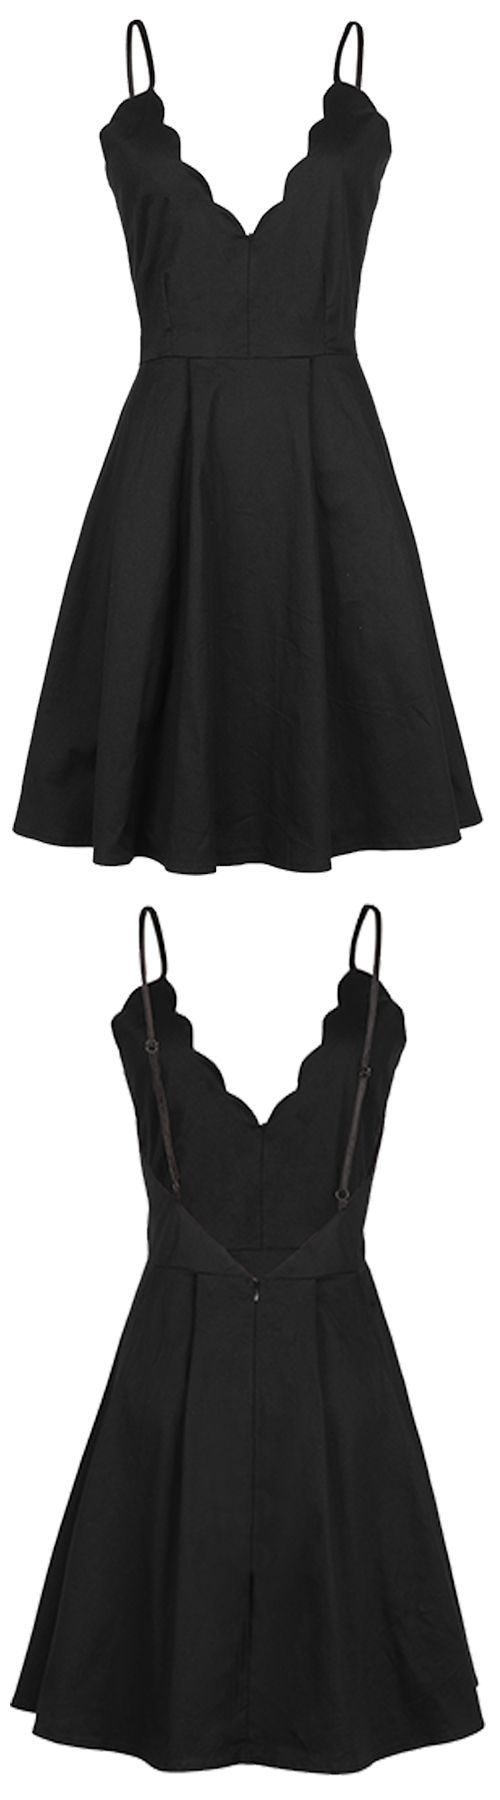 Black Short A-Line Homecoming Dress Straps Satin Homecoming Dress Sweet ...